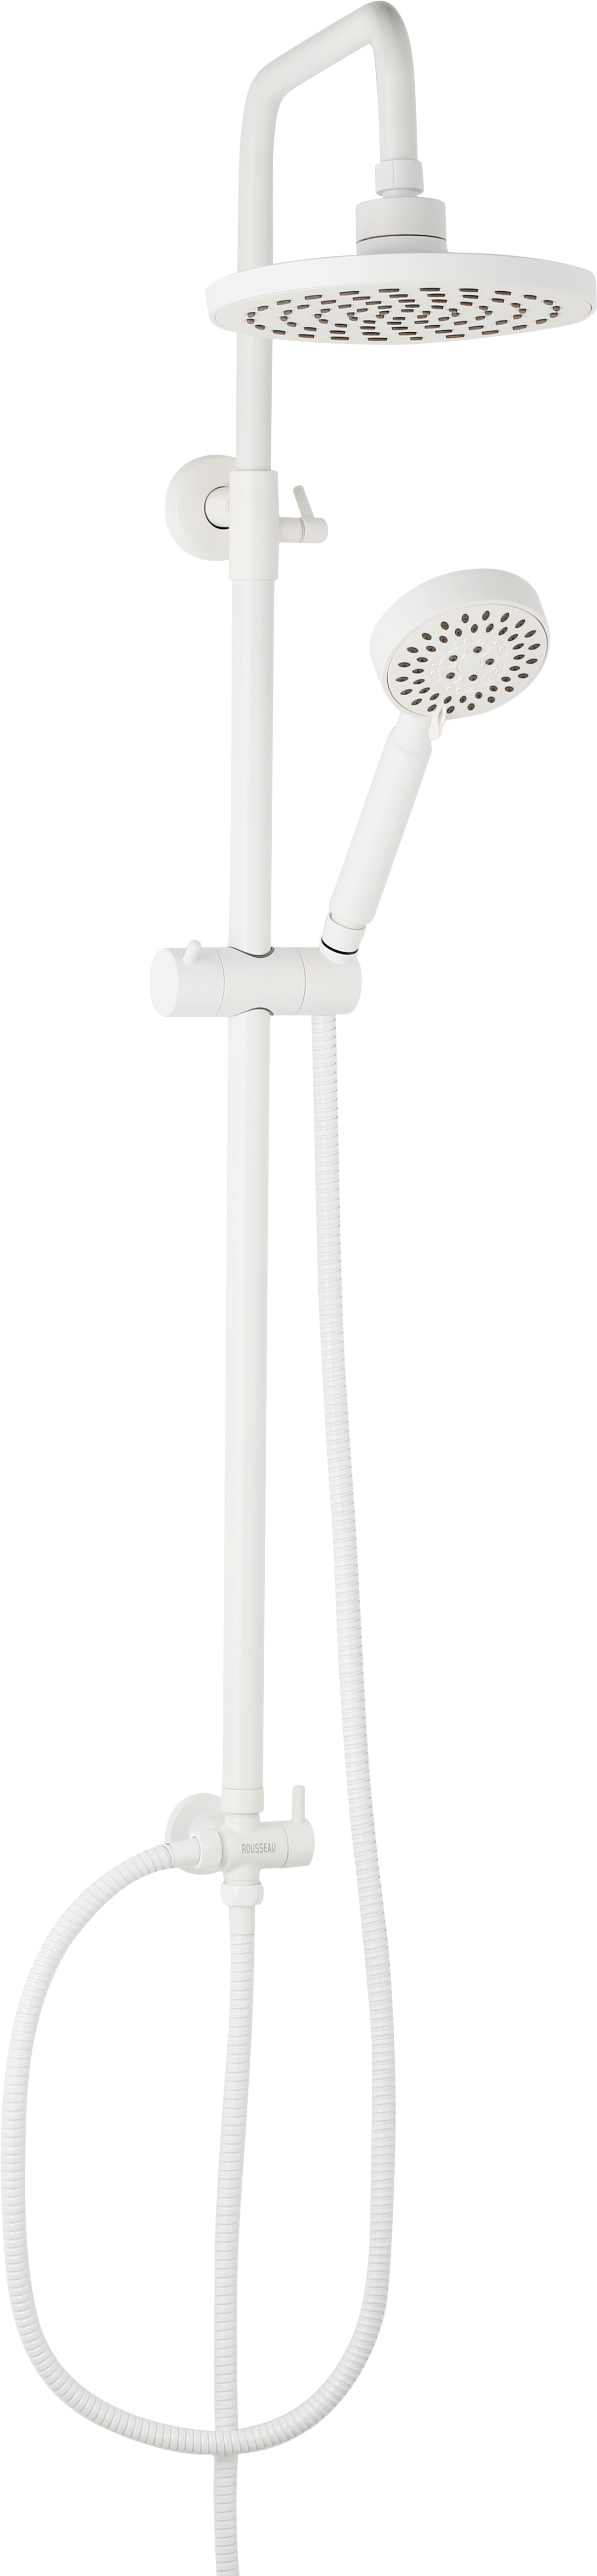 Rousseau columna de ducha sin grifo spatial 2